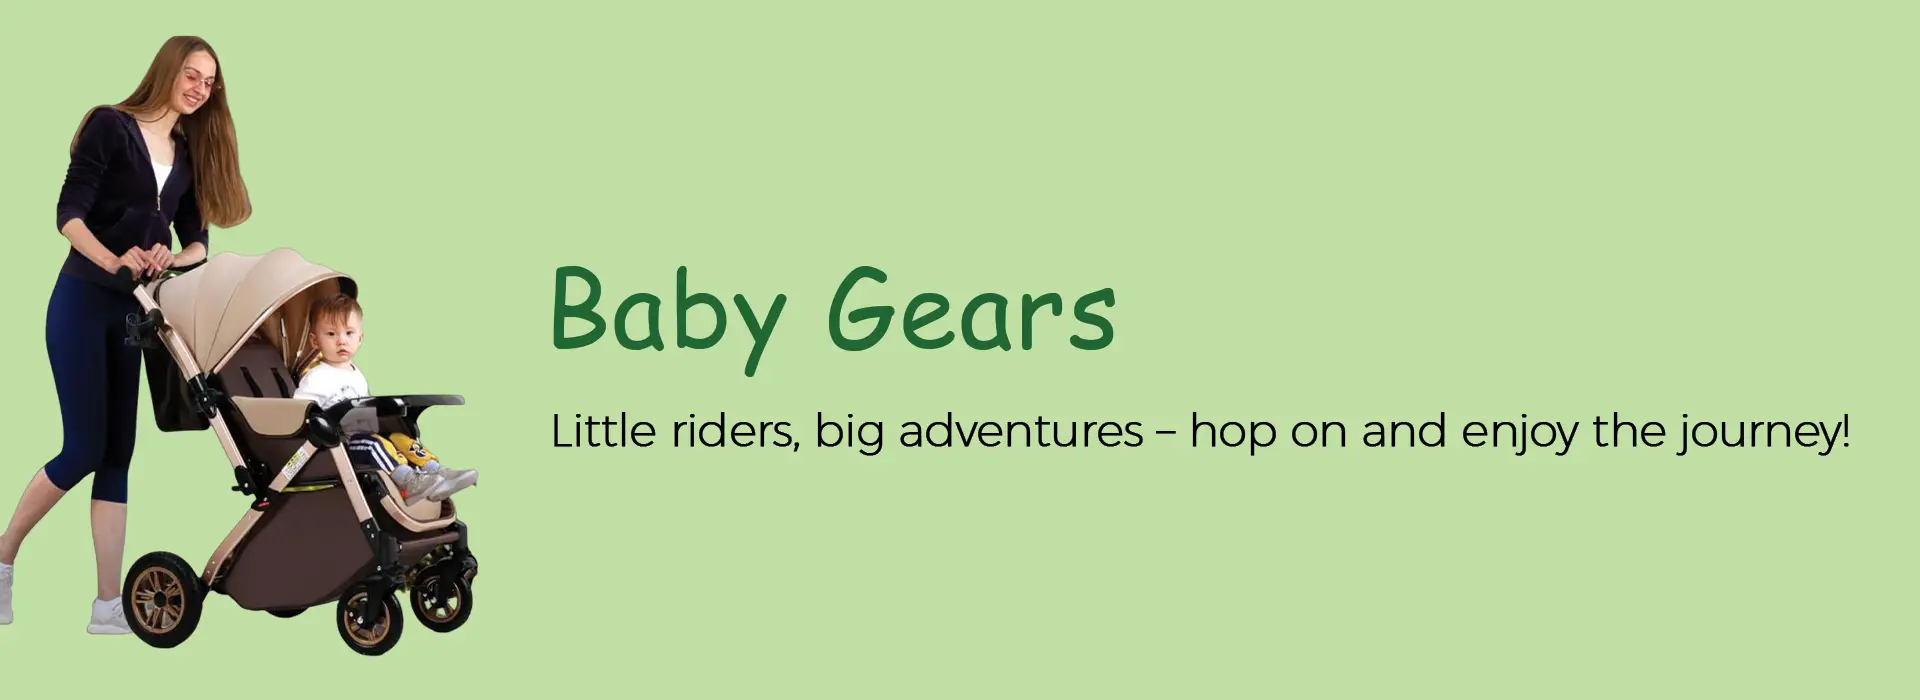 Baby gears